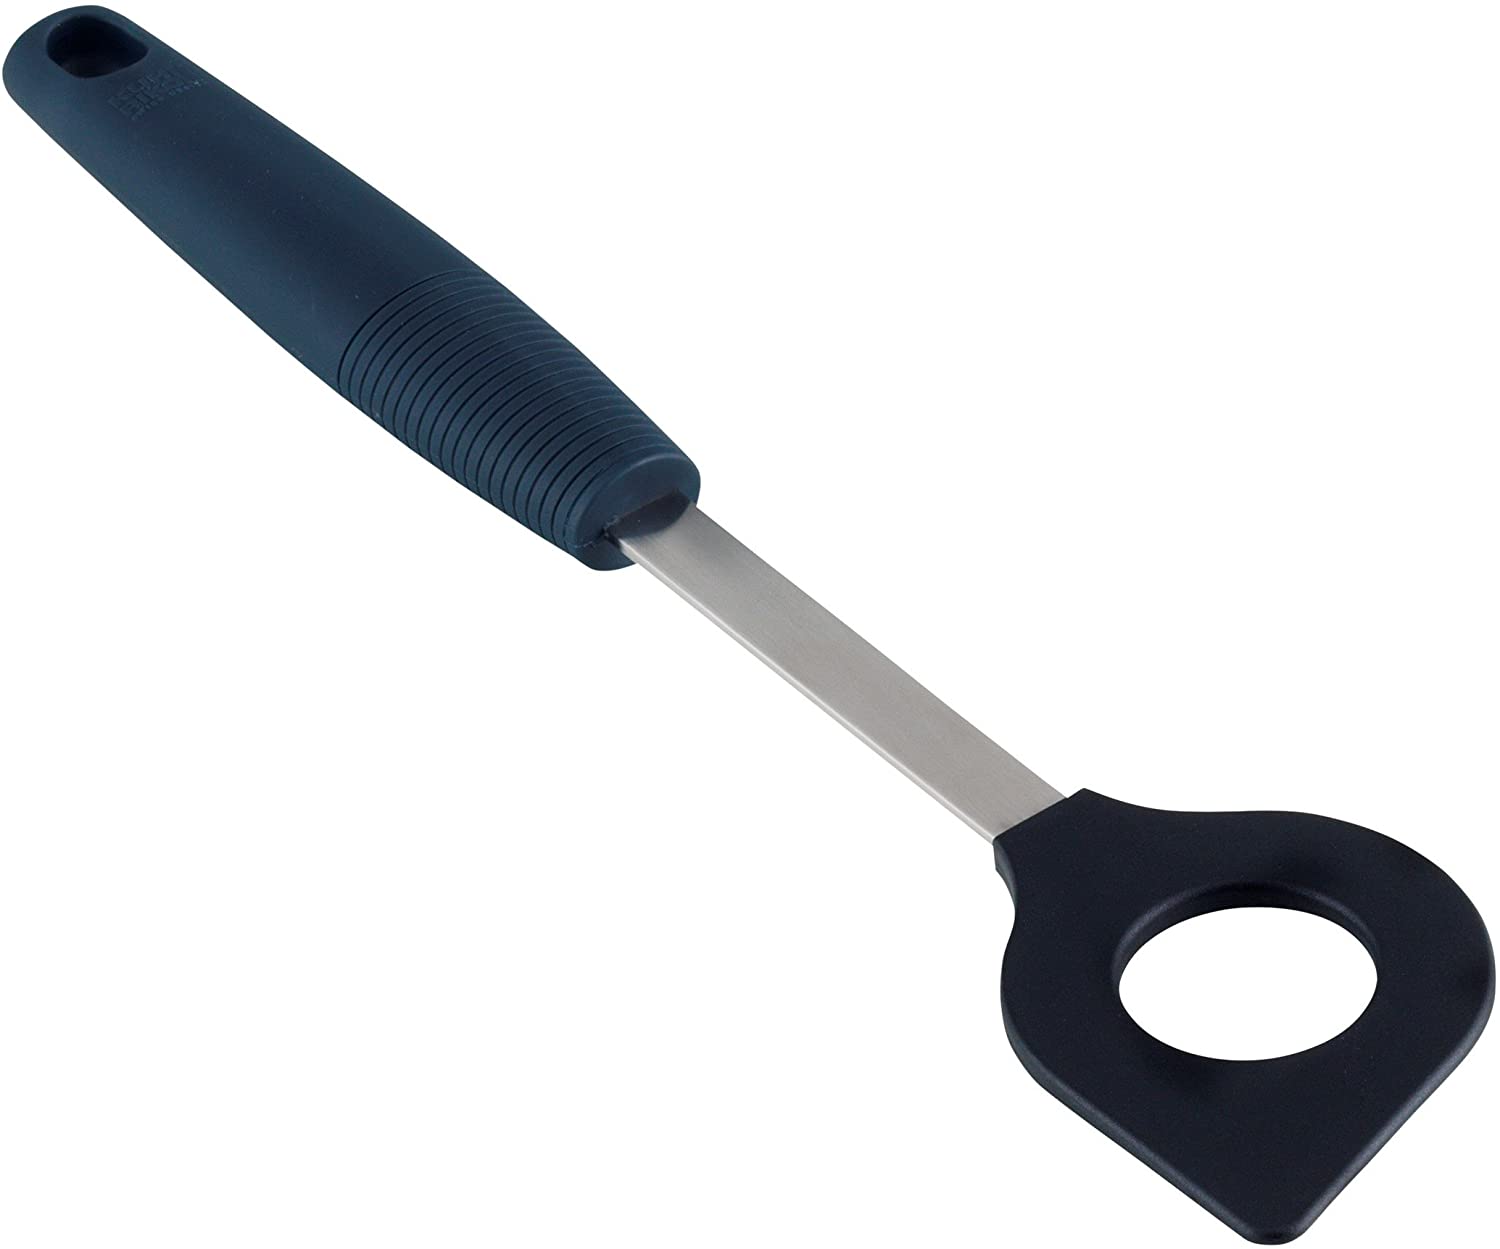 KUHN RIKON Cooks\' Tools Mixing Ladle in Black, Plastic, 31 x 6.5 x 2 cm